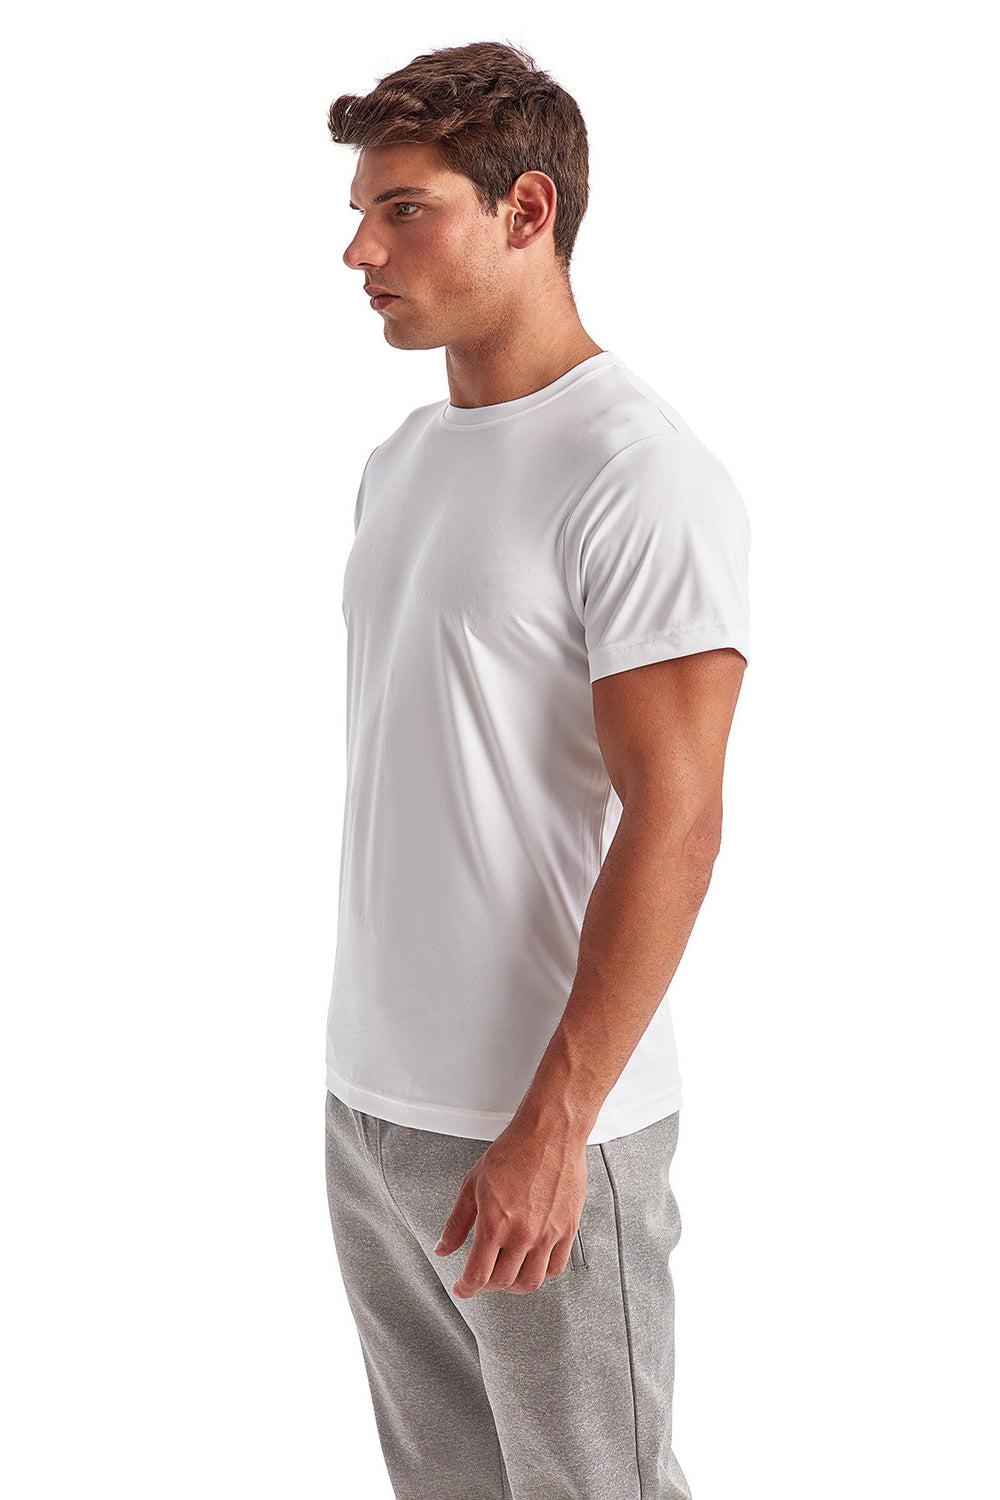 TriDri TD501 Mens Moisture Wicking Short Sleeve Crewneck T-Shirt White 3Q